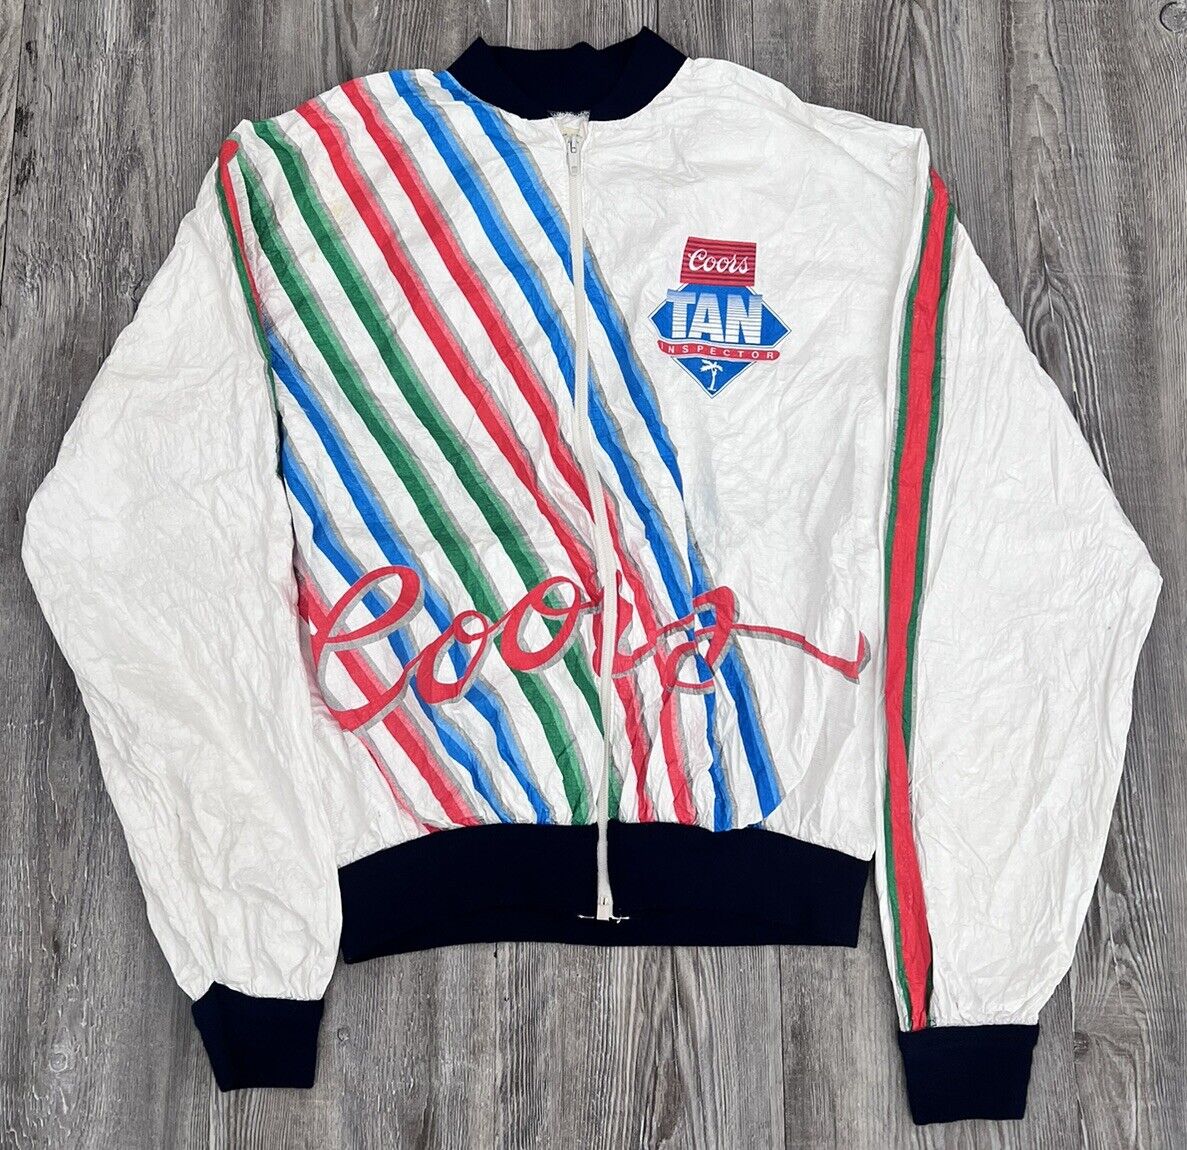 Vintage 1980’s RARE ORIGINAL COORS TAN INSPECTOR  Tyvek Jacket NOS Never Used